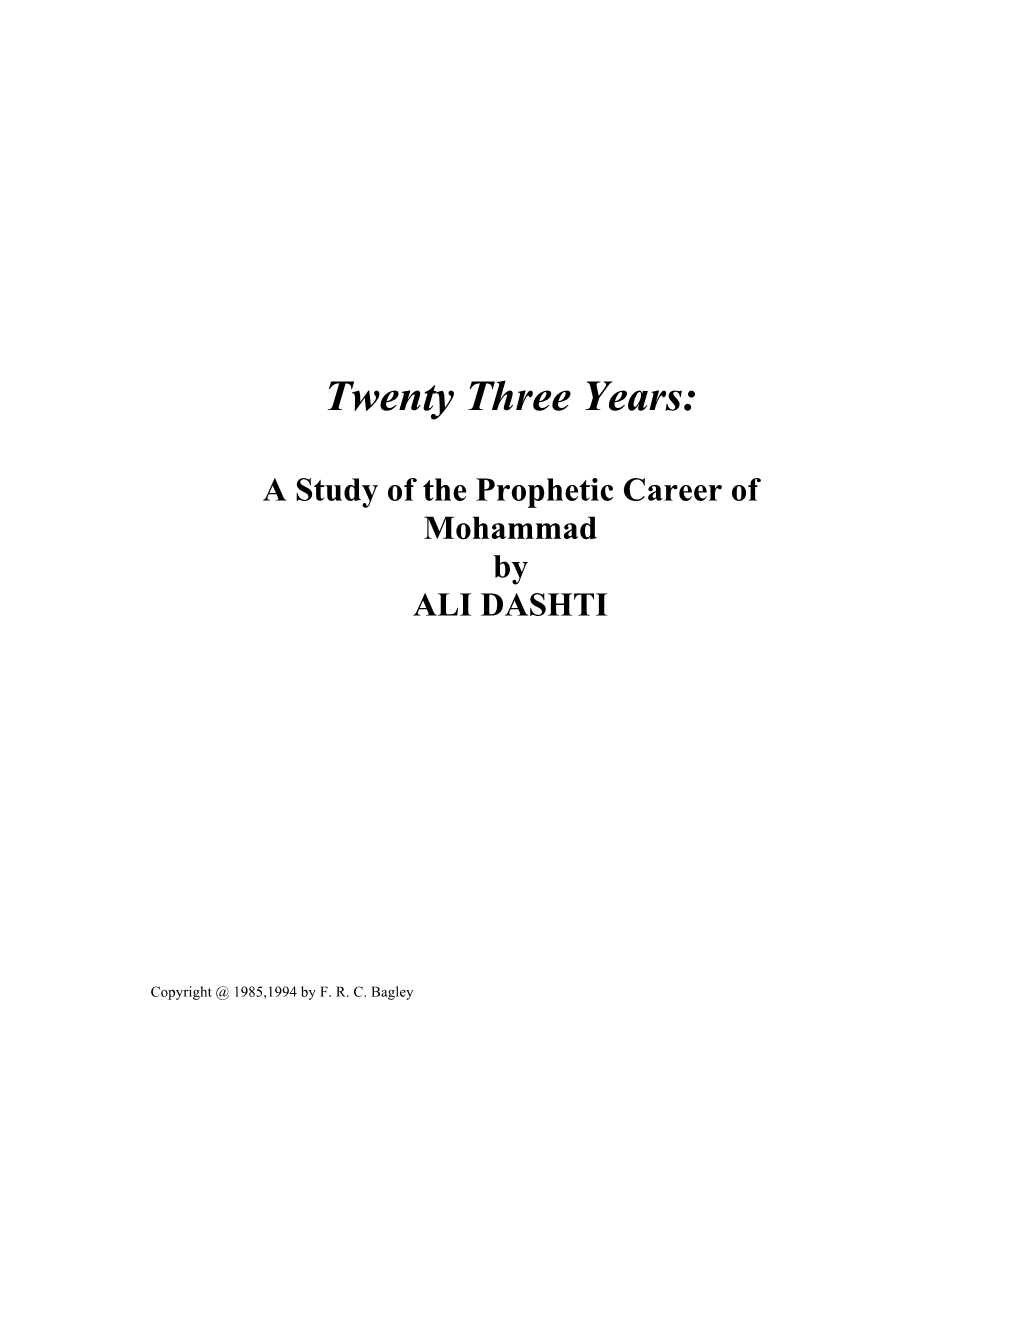 Twentythreeyears by Prof. Ali Dashti